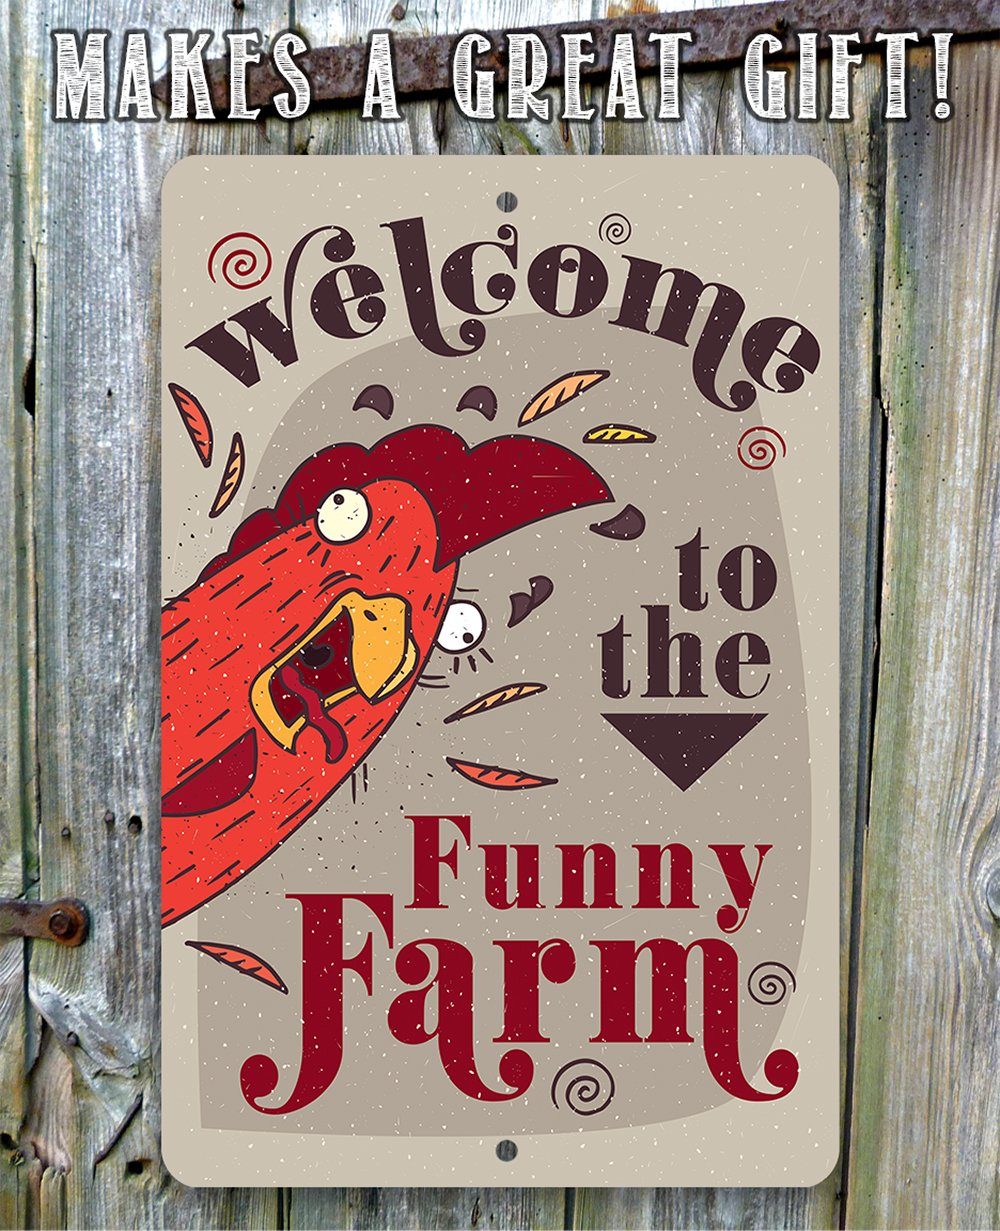 Funny Farm - Metal Sign | Lone Star Art.